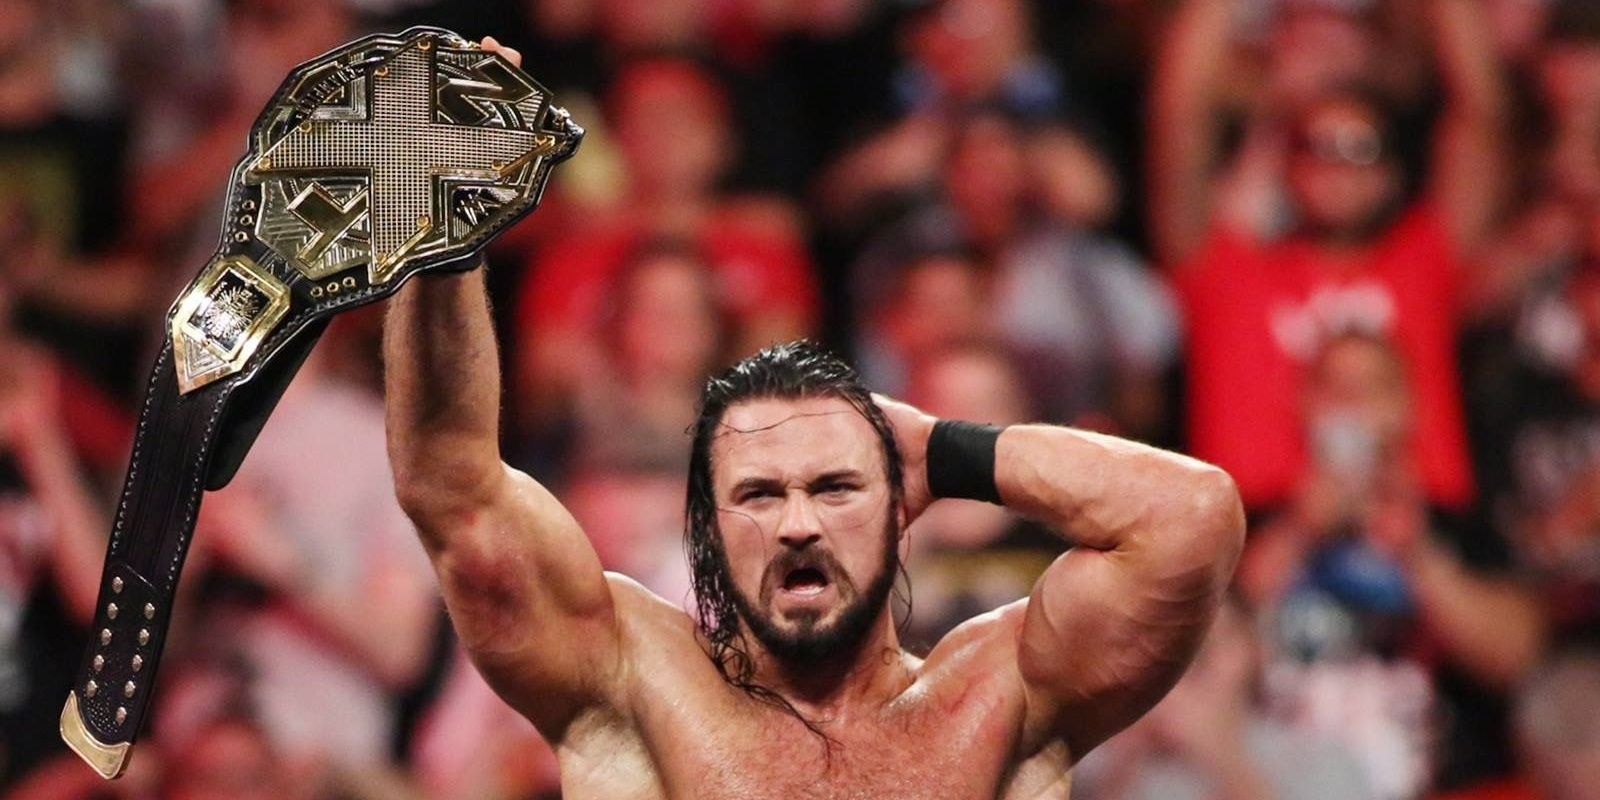 Drew McIntyre NXT Champion